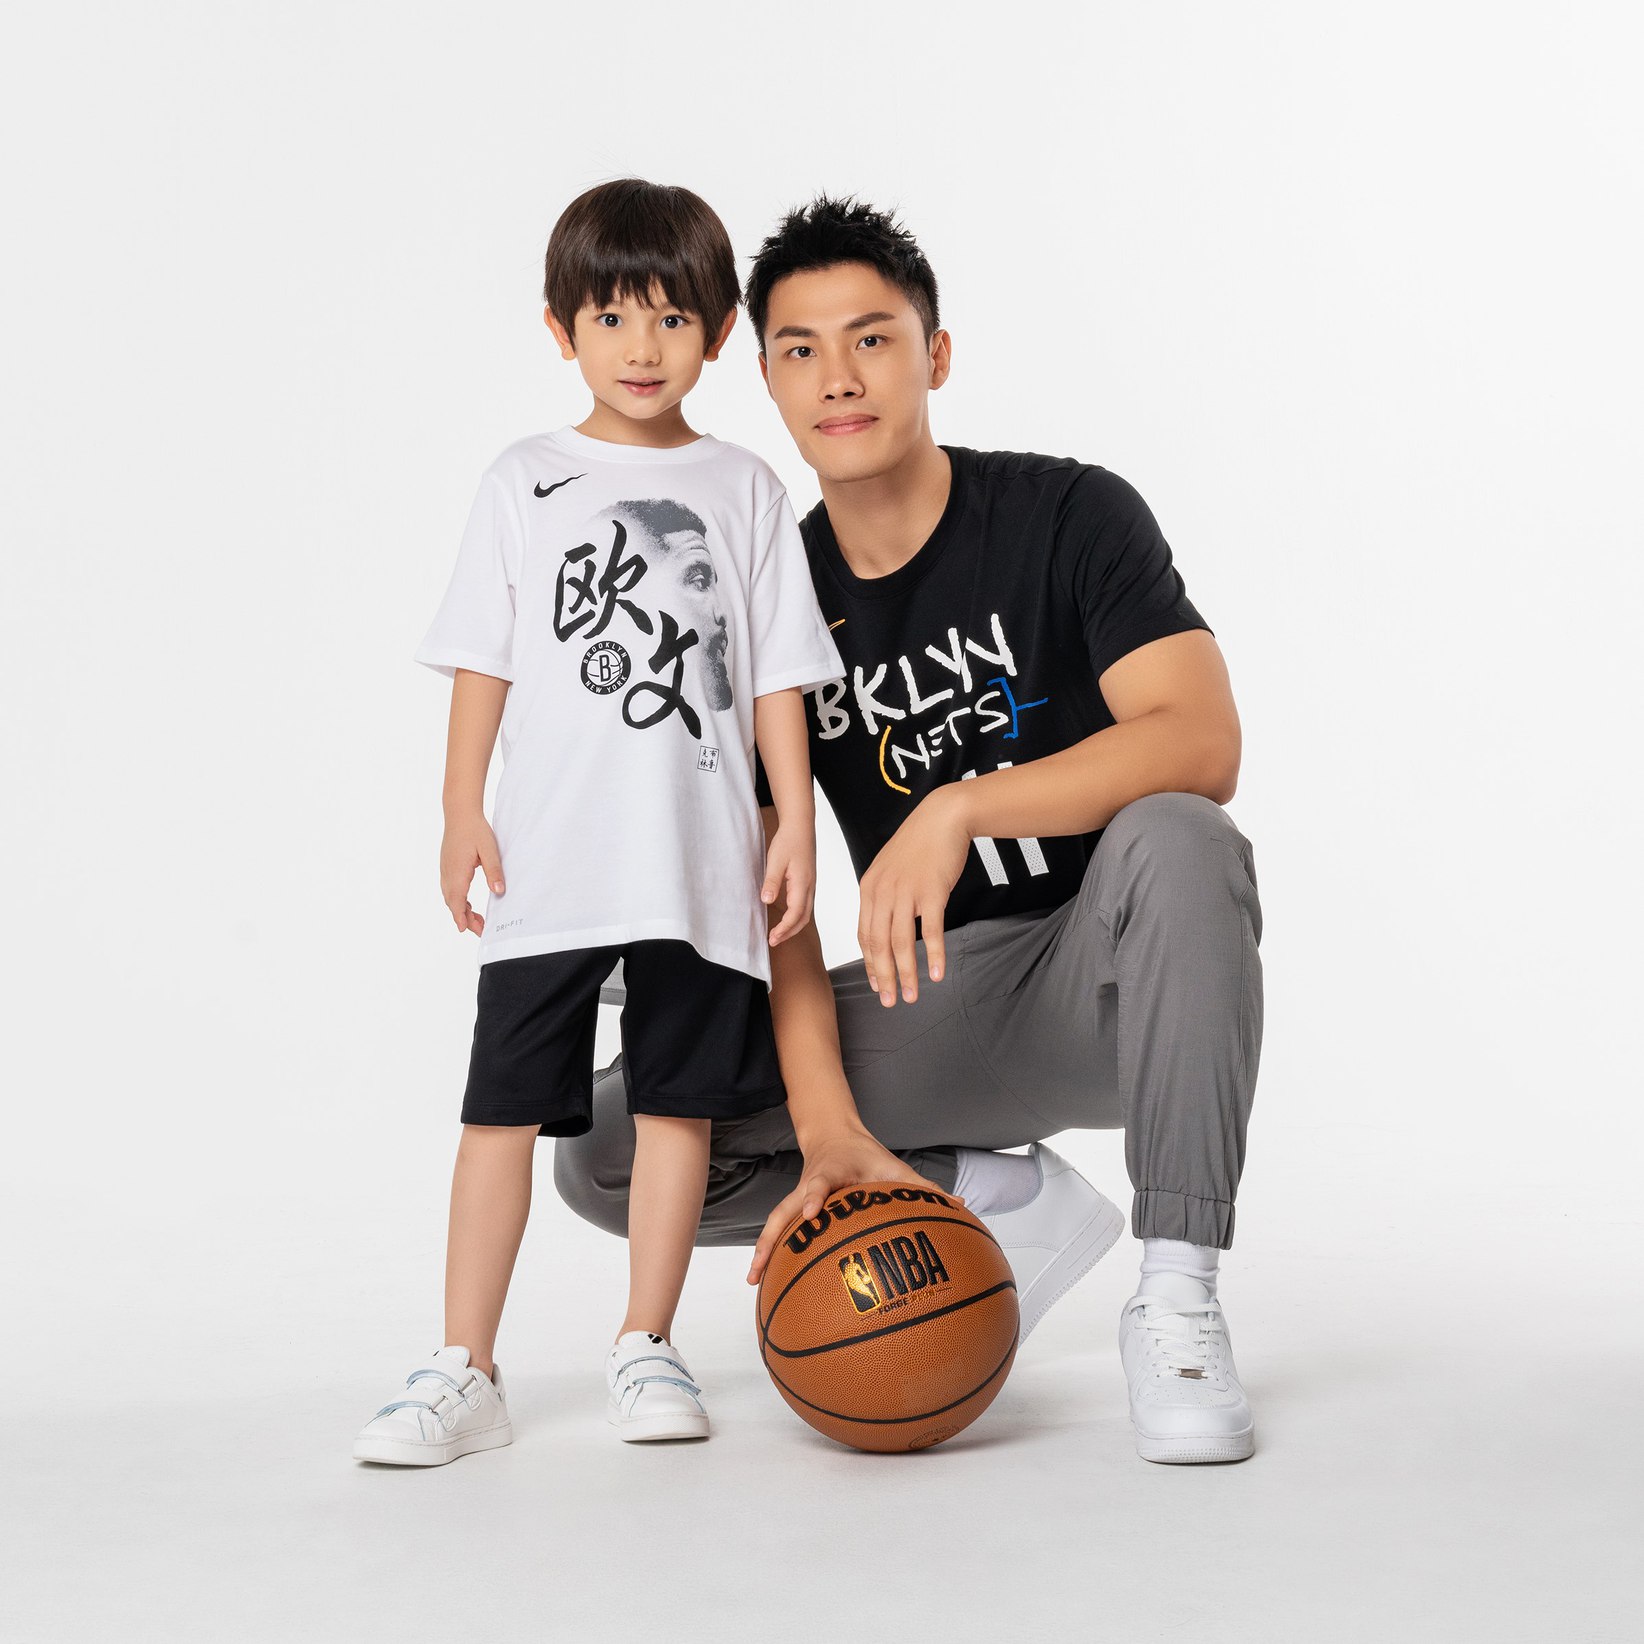 NIKE 耐克 NBA-Nike Kids 布鲁克林篮网队 GLOBAL GAME 欧文 大童短袖T恤 95.6元